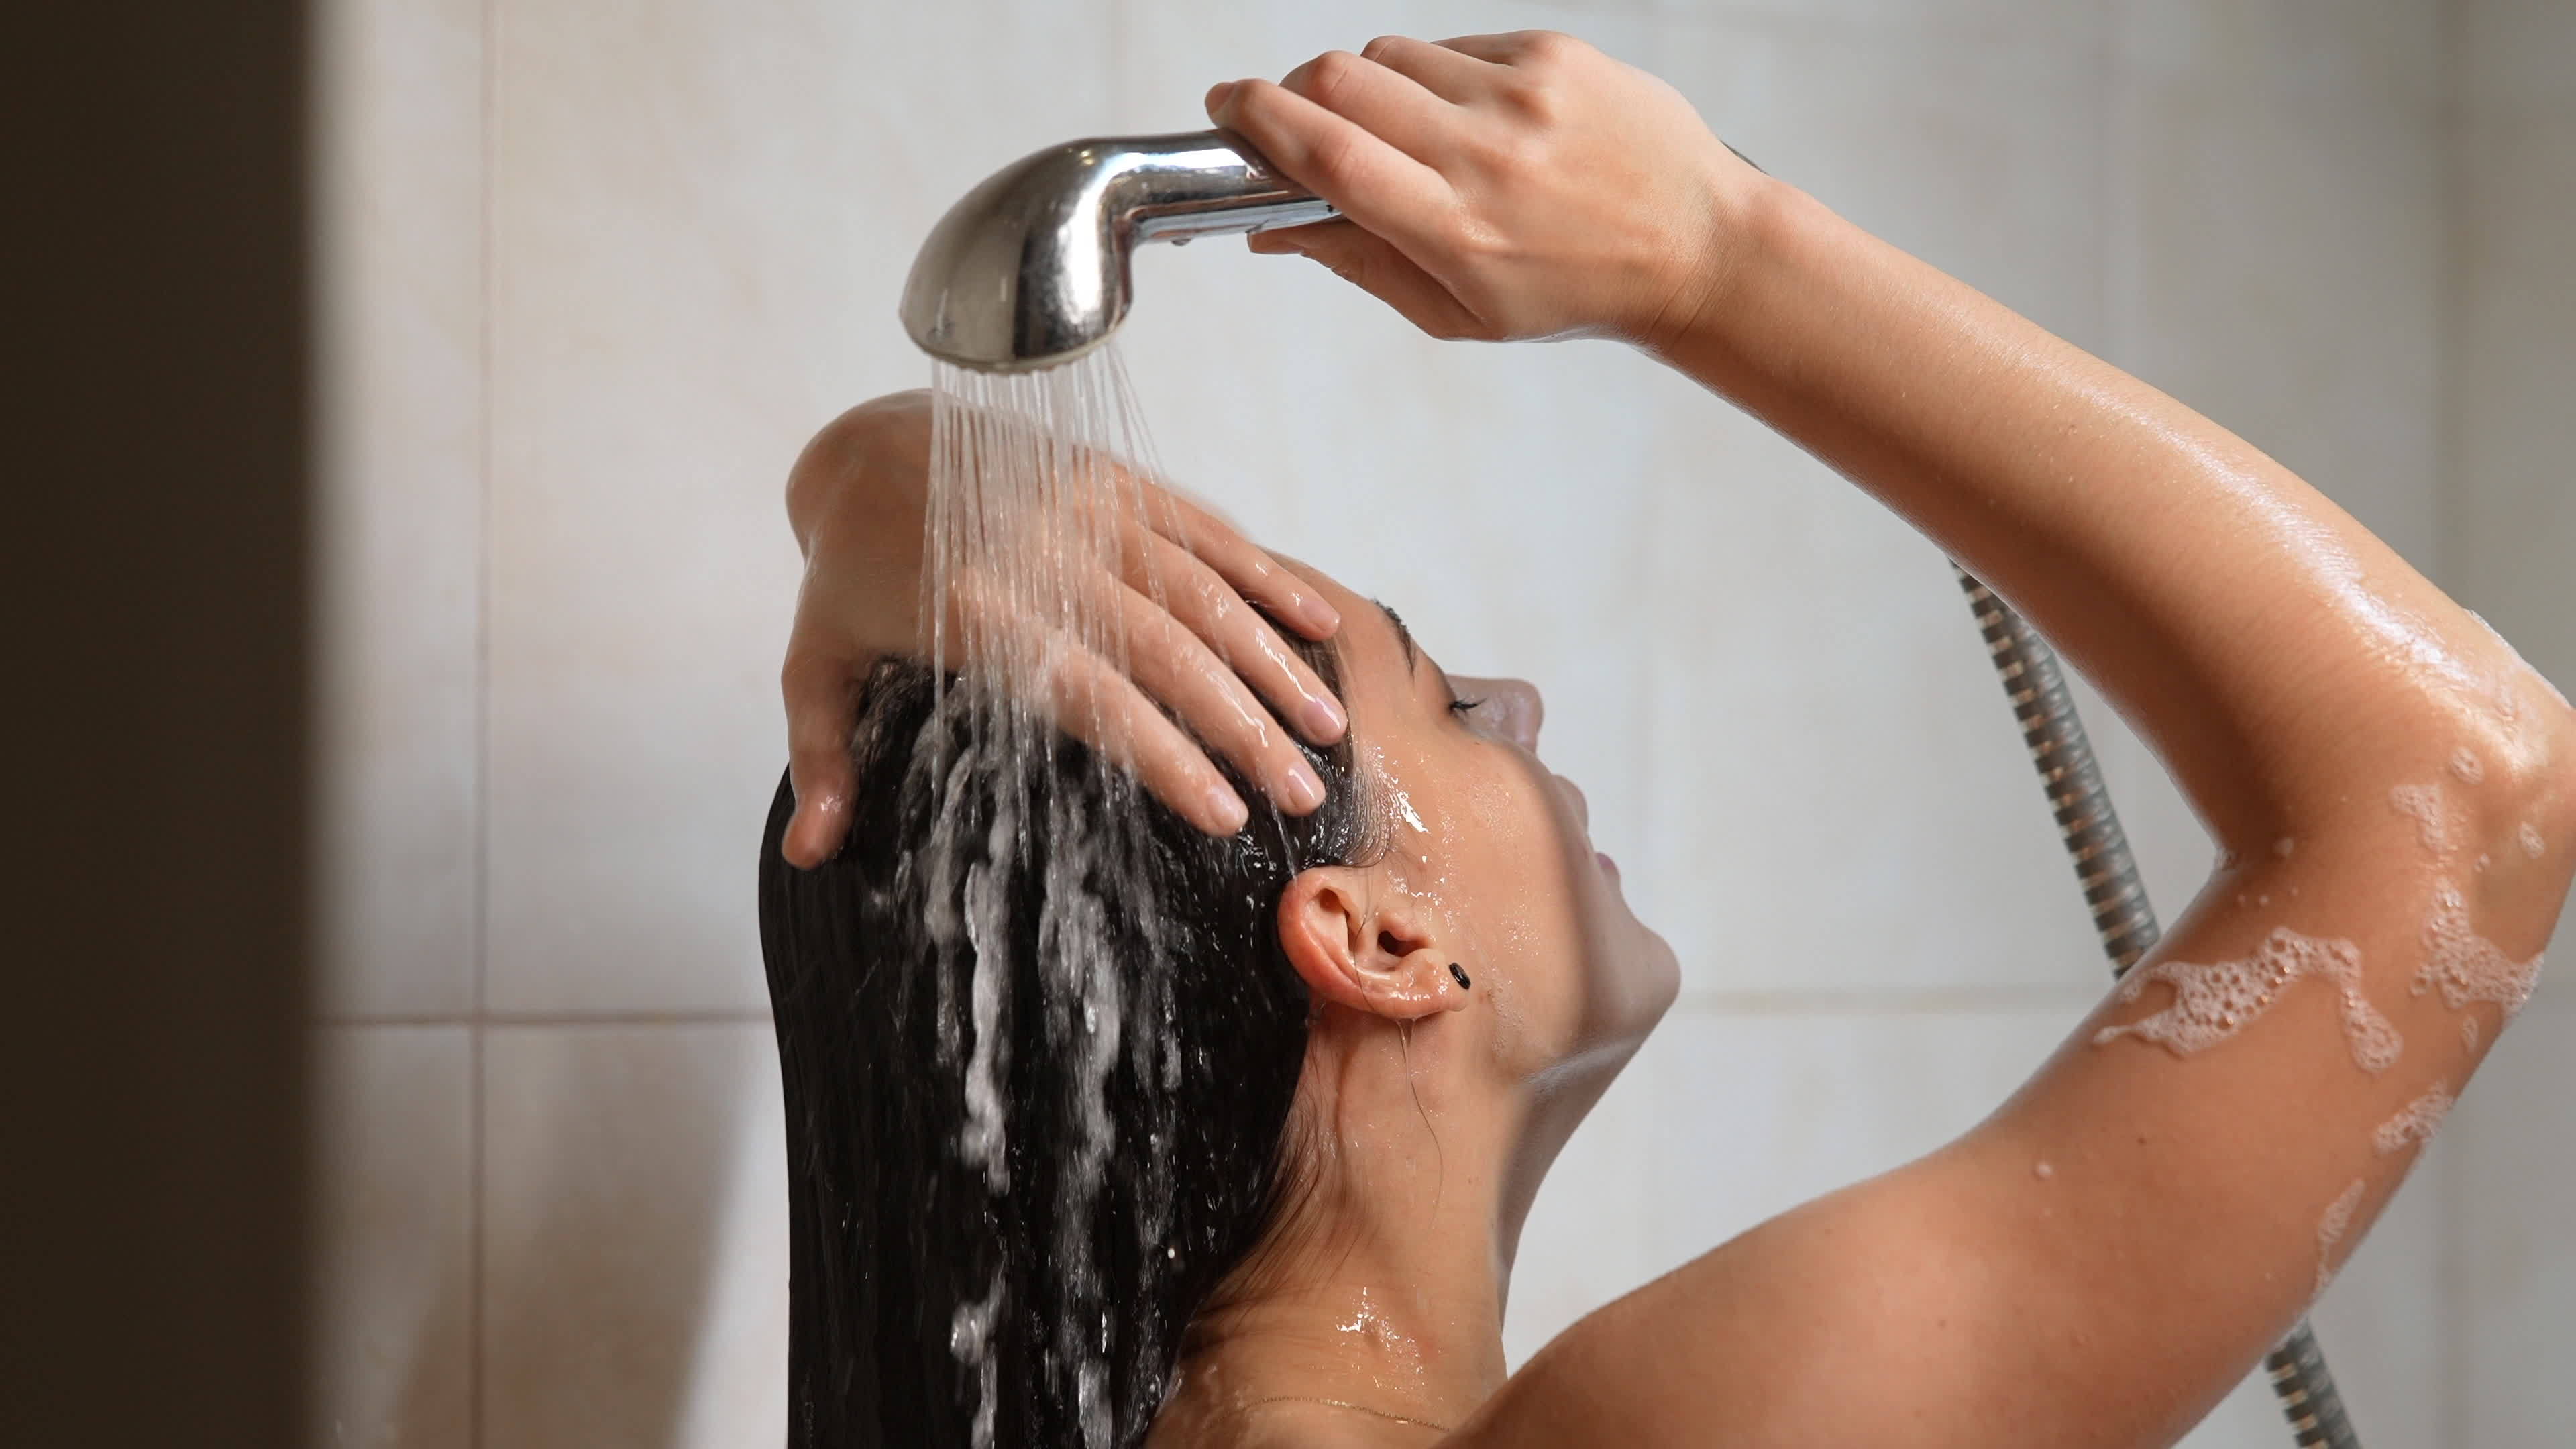 christine ewanchuk share women in shower video photos